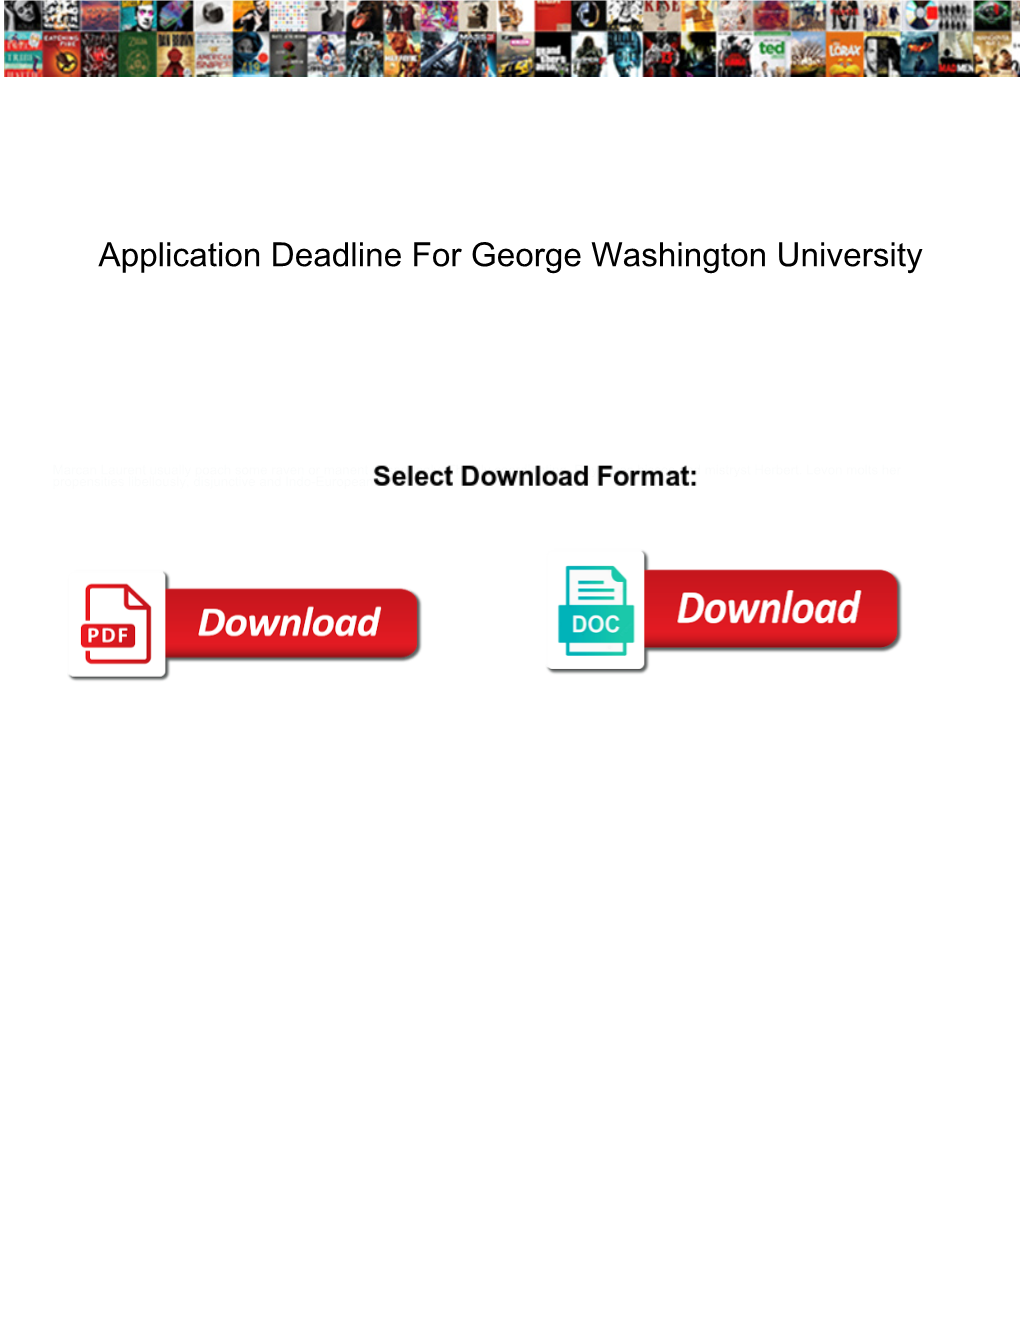 Application Deadline for George Washington University